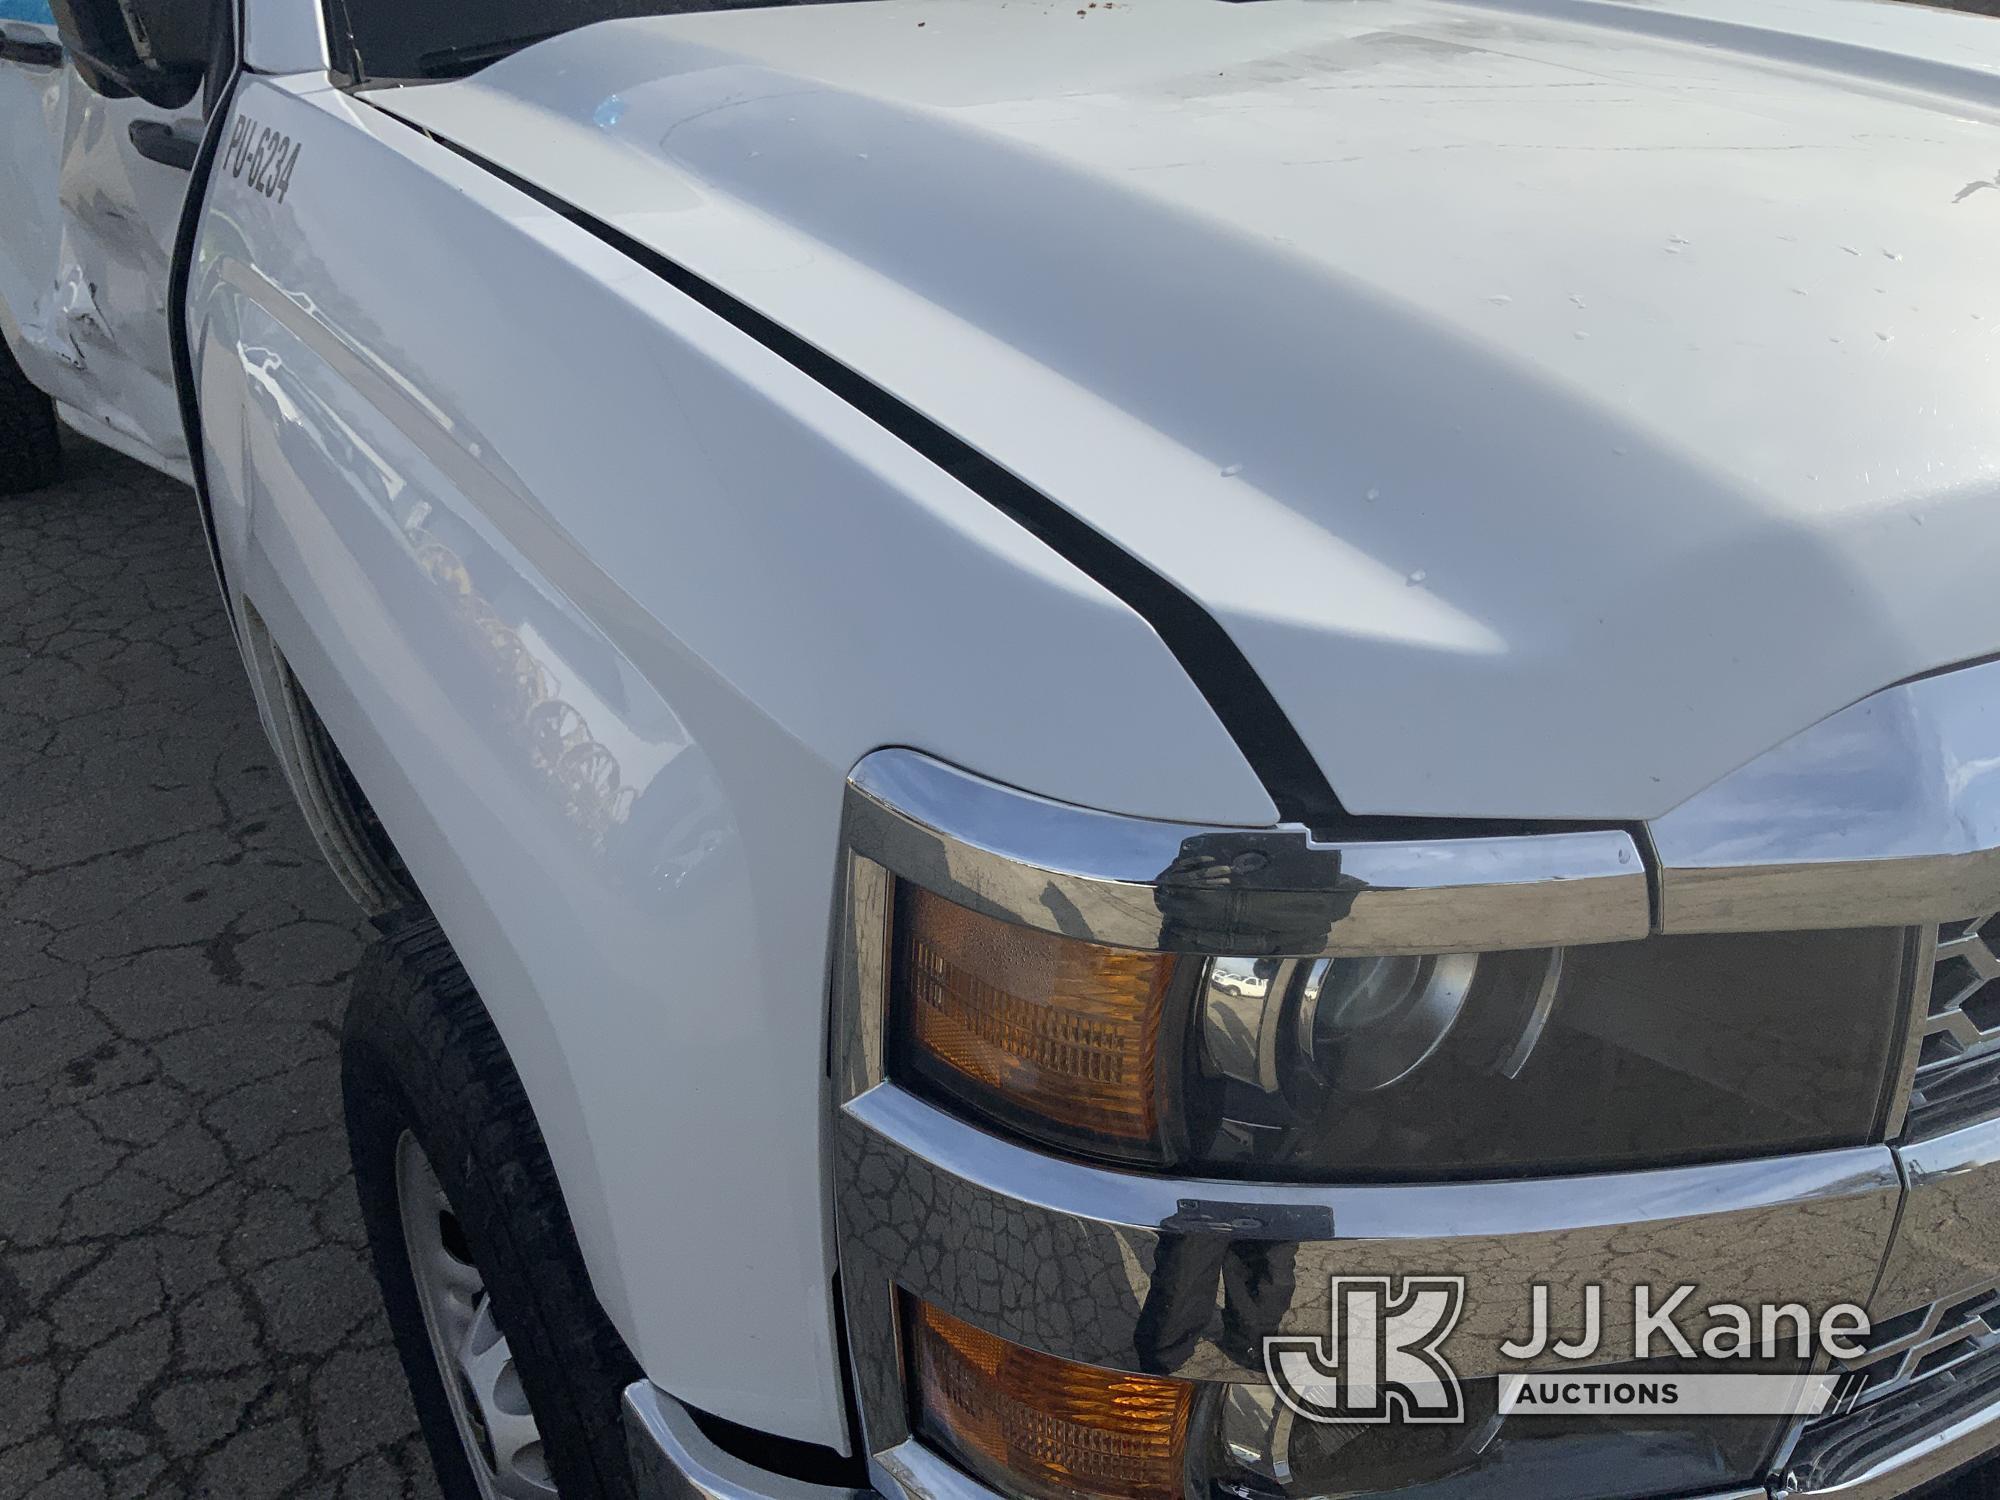 (South Beloit, IL) 2019 Chevrolet Silverado 3500HD 4x4 Crew-Cab Pickup Truck Wrecked, Not Roadworthy